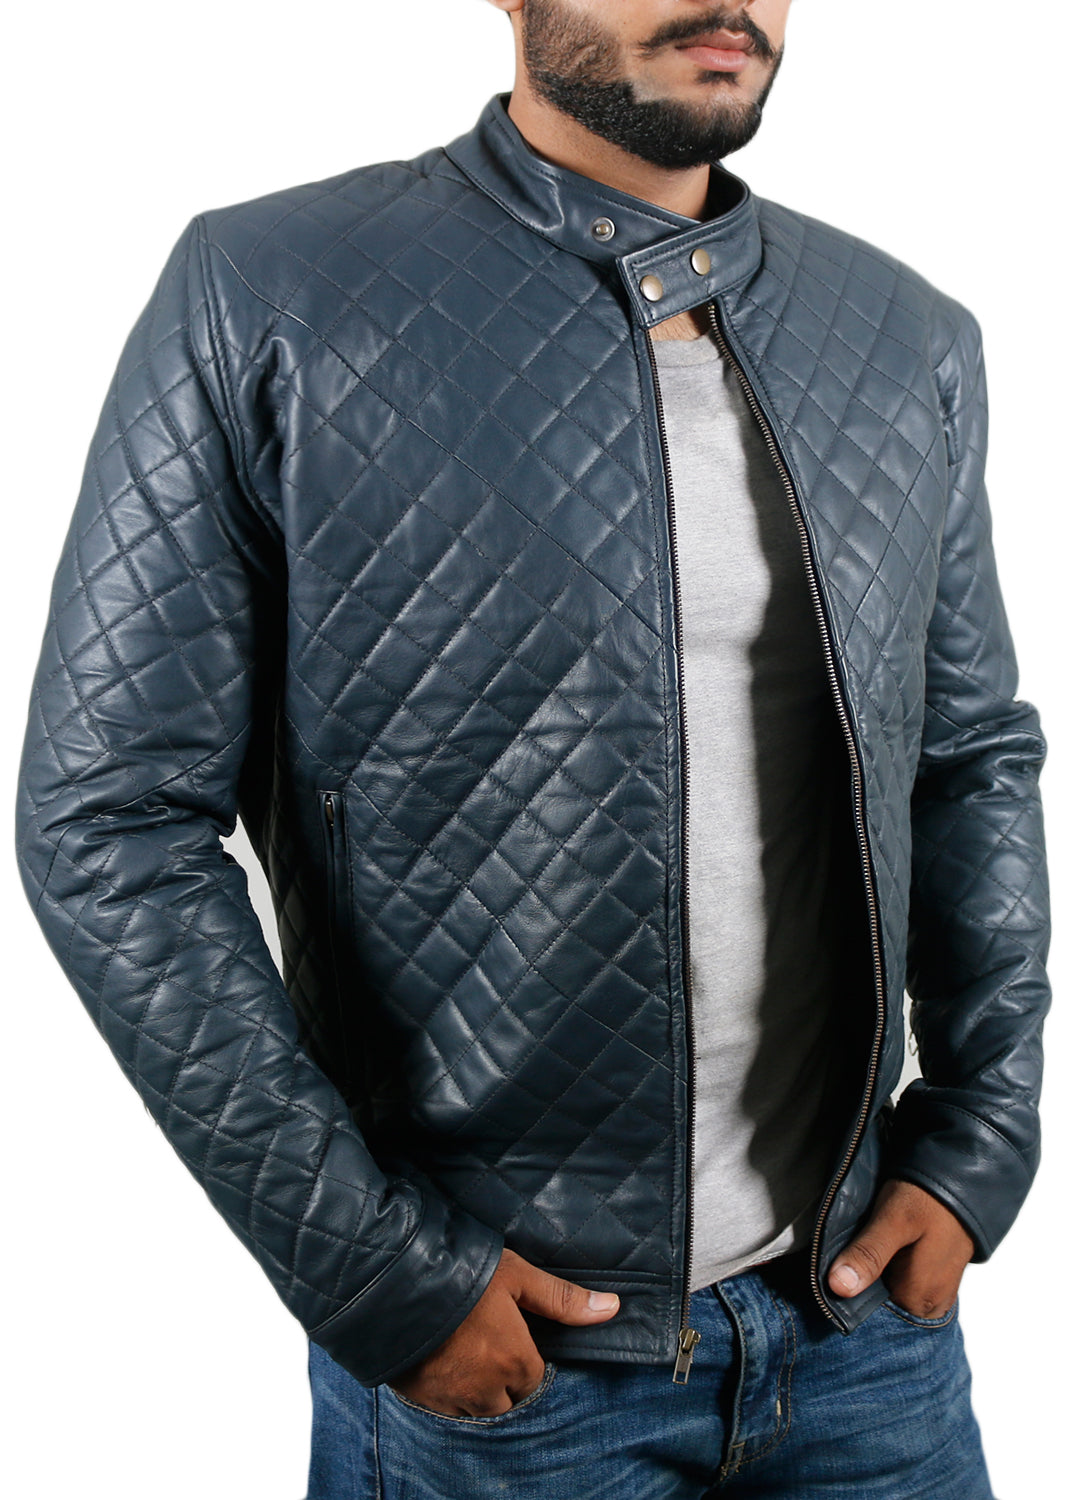 Leather Jackets Hub Mens Genuine Lambskin Leather Jacket (Black, Fencing Jacket) - 1501324